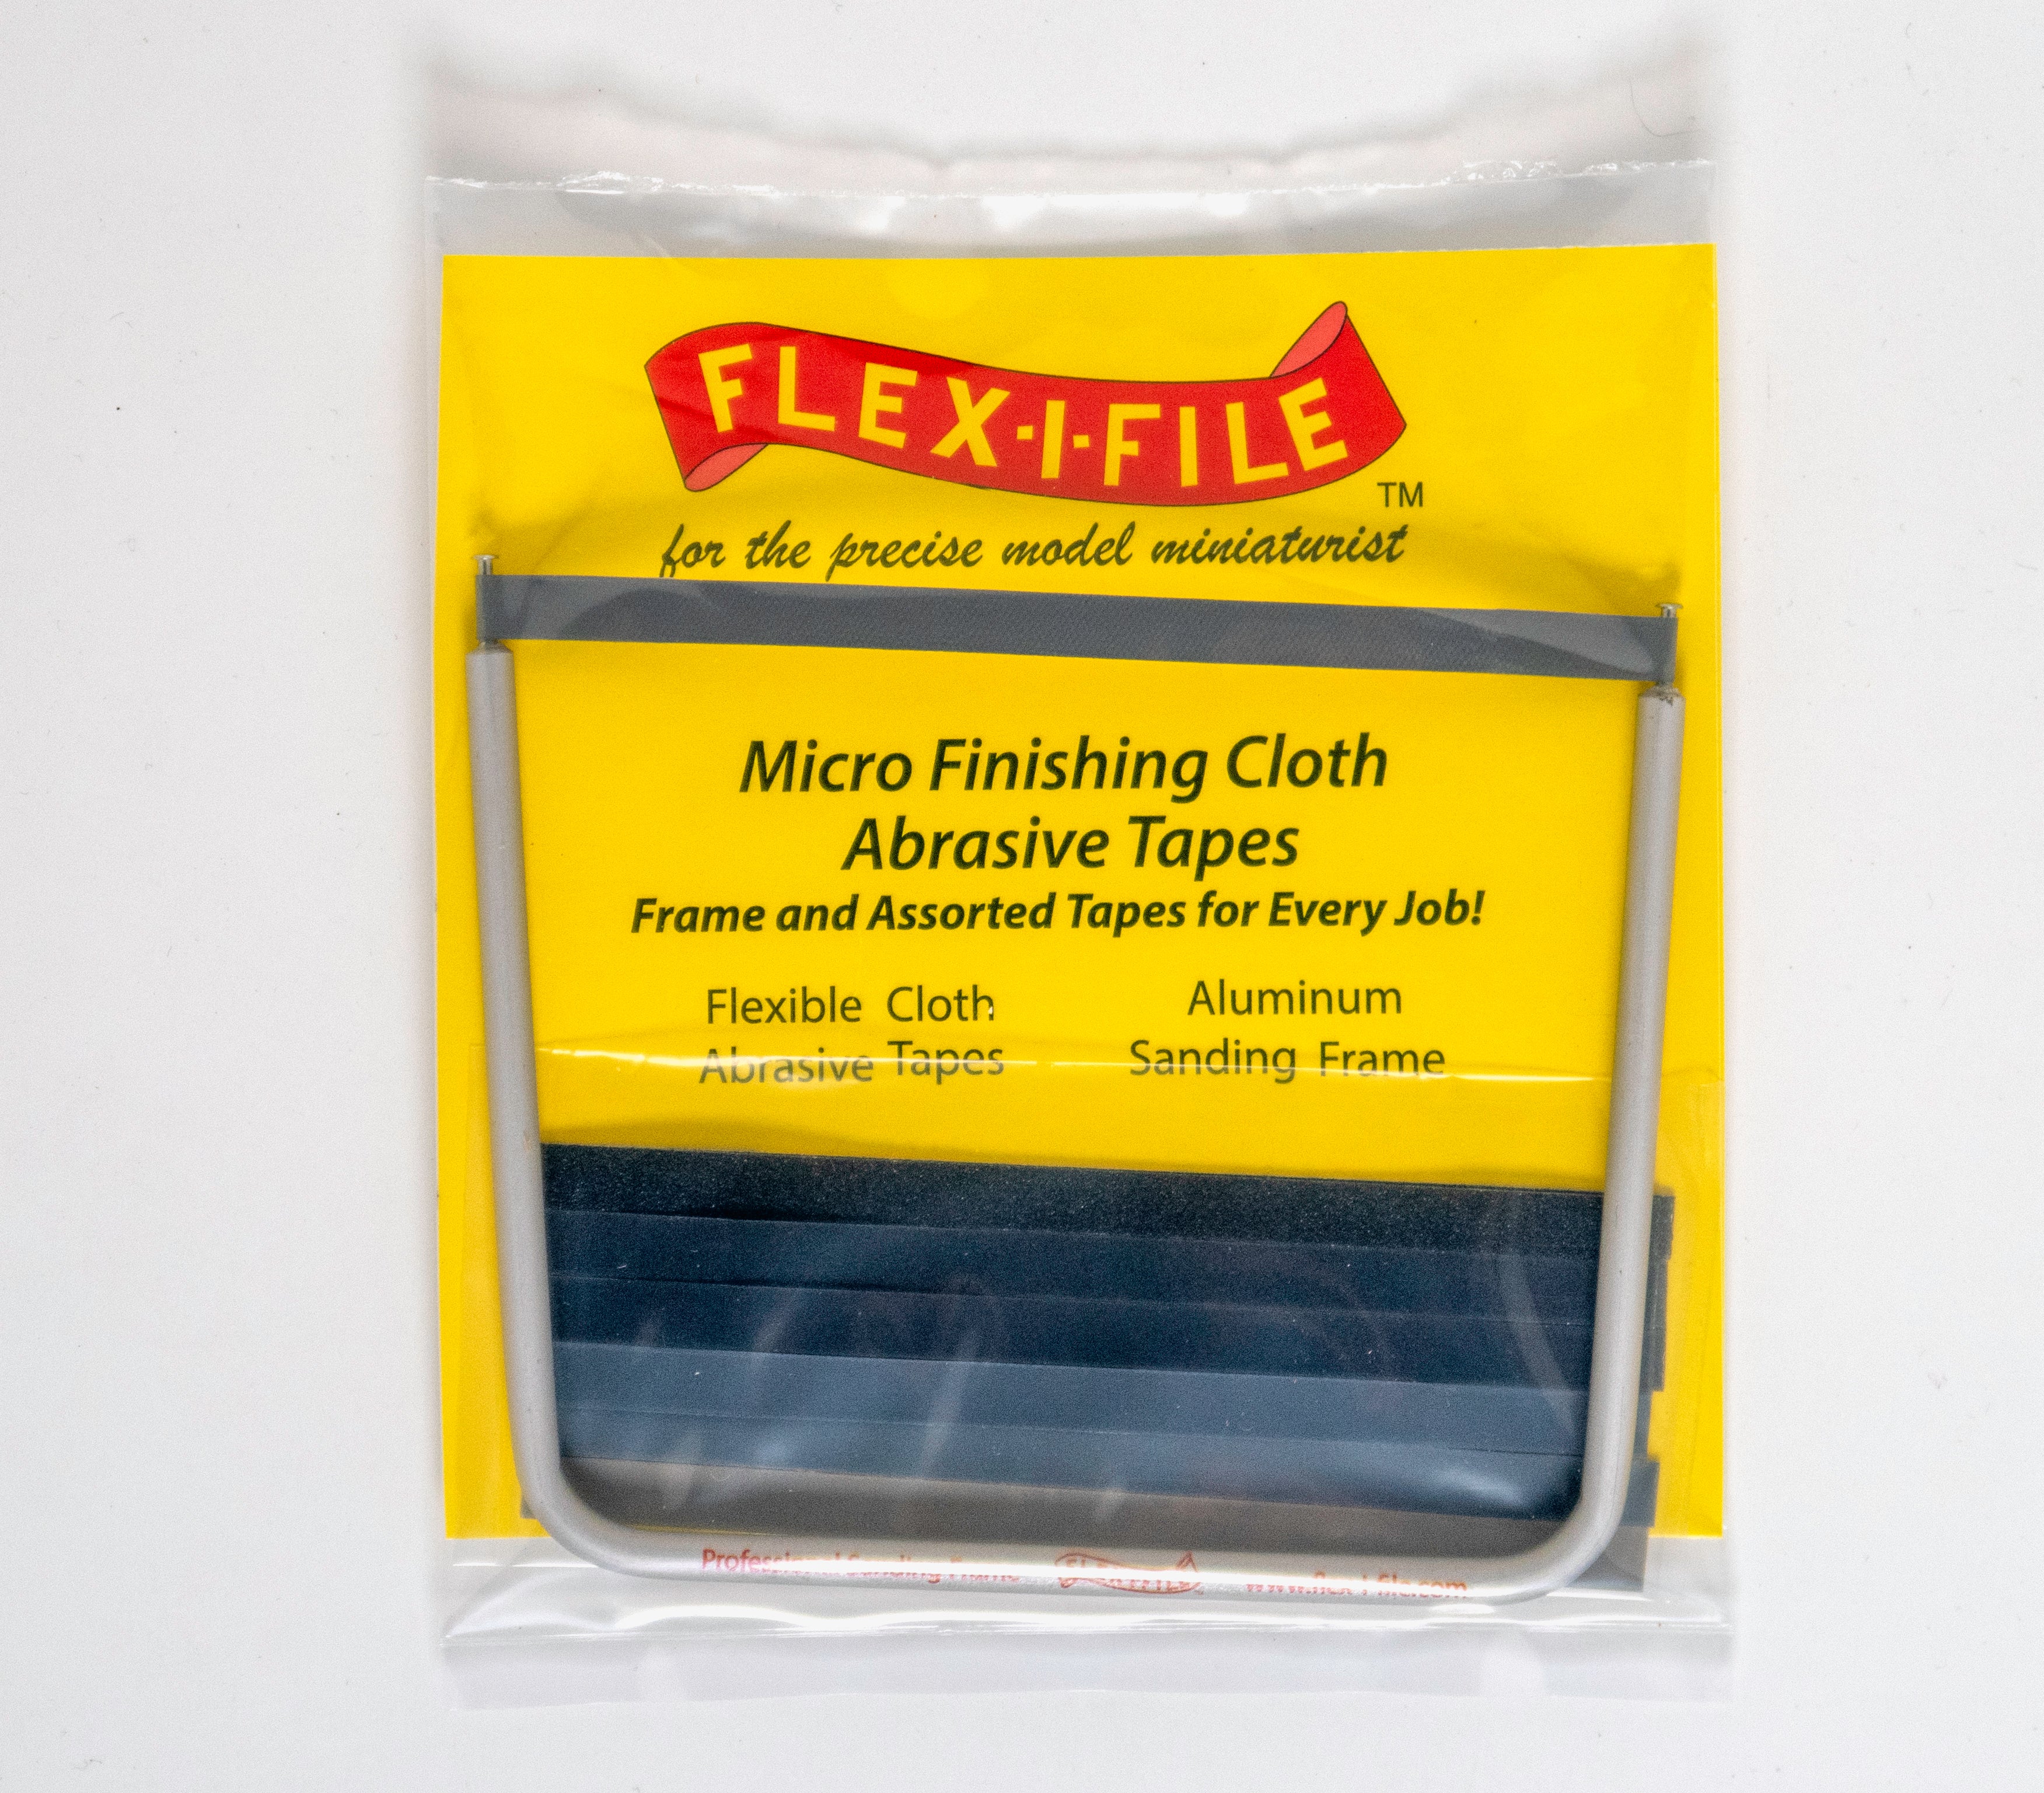 Micro Finishing Cloth Abrasive Tapes – Flex-I-File